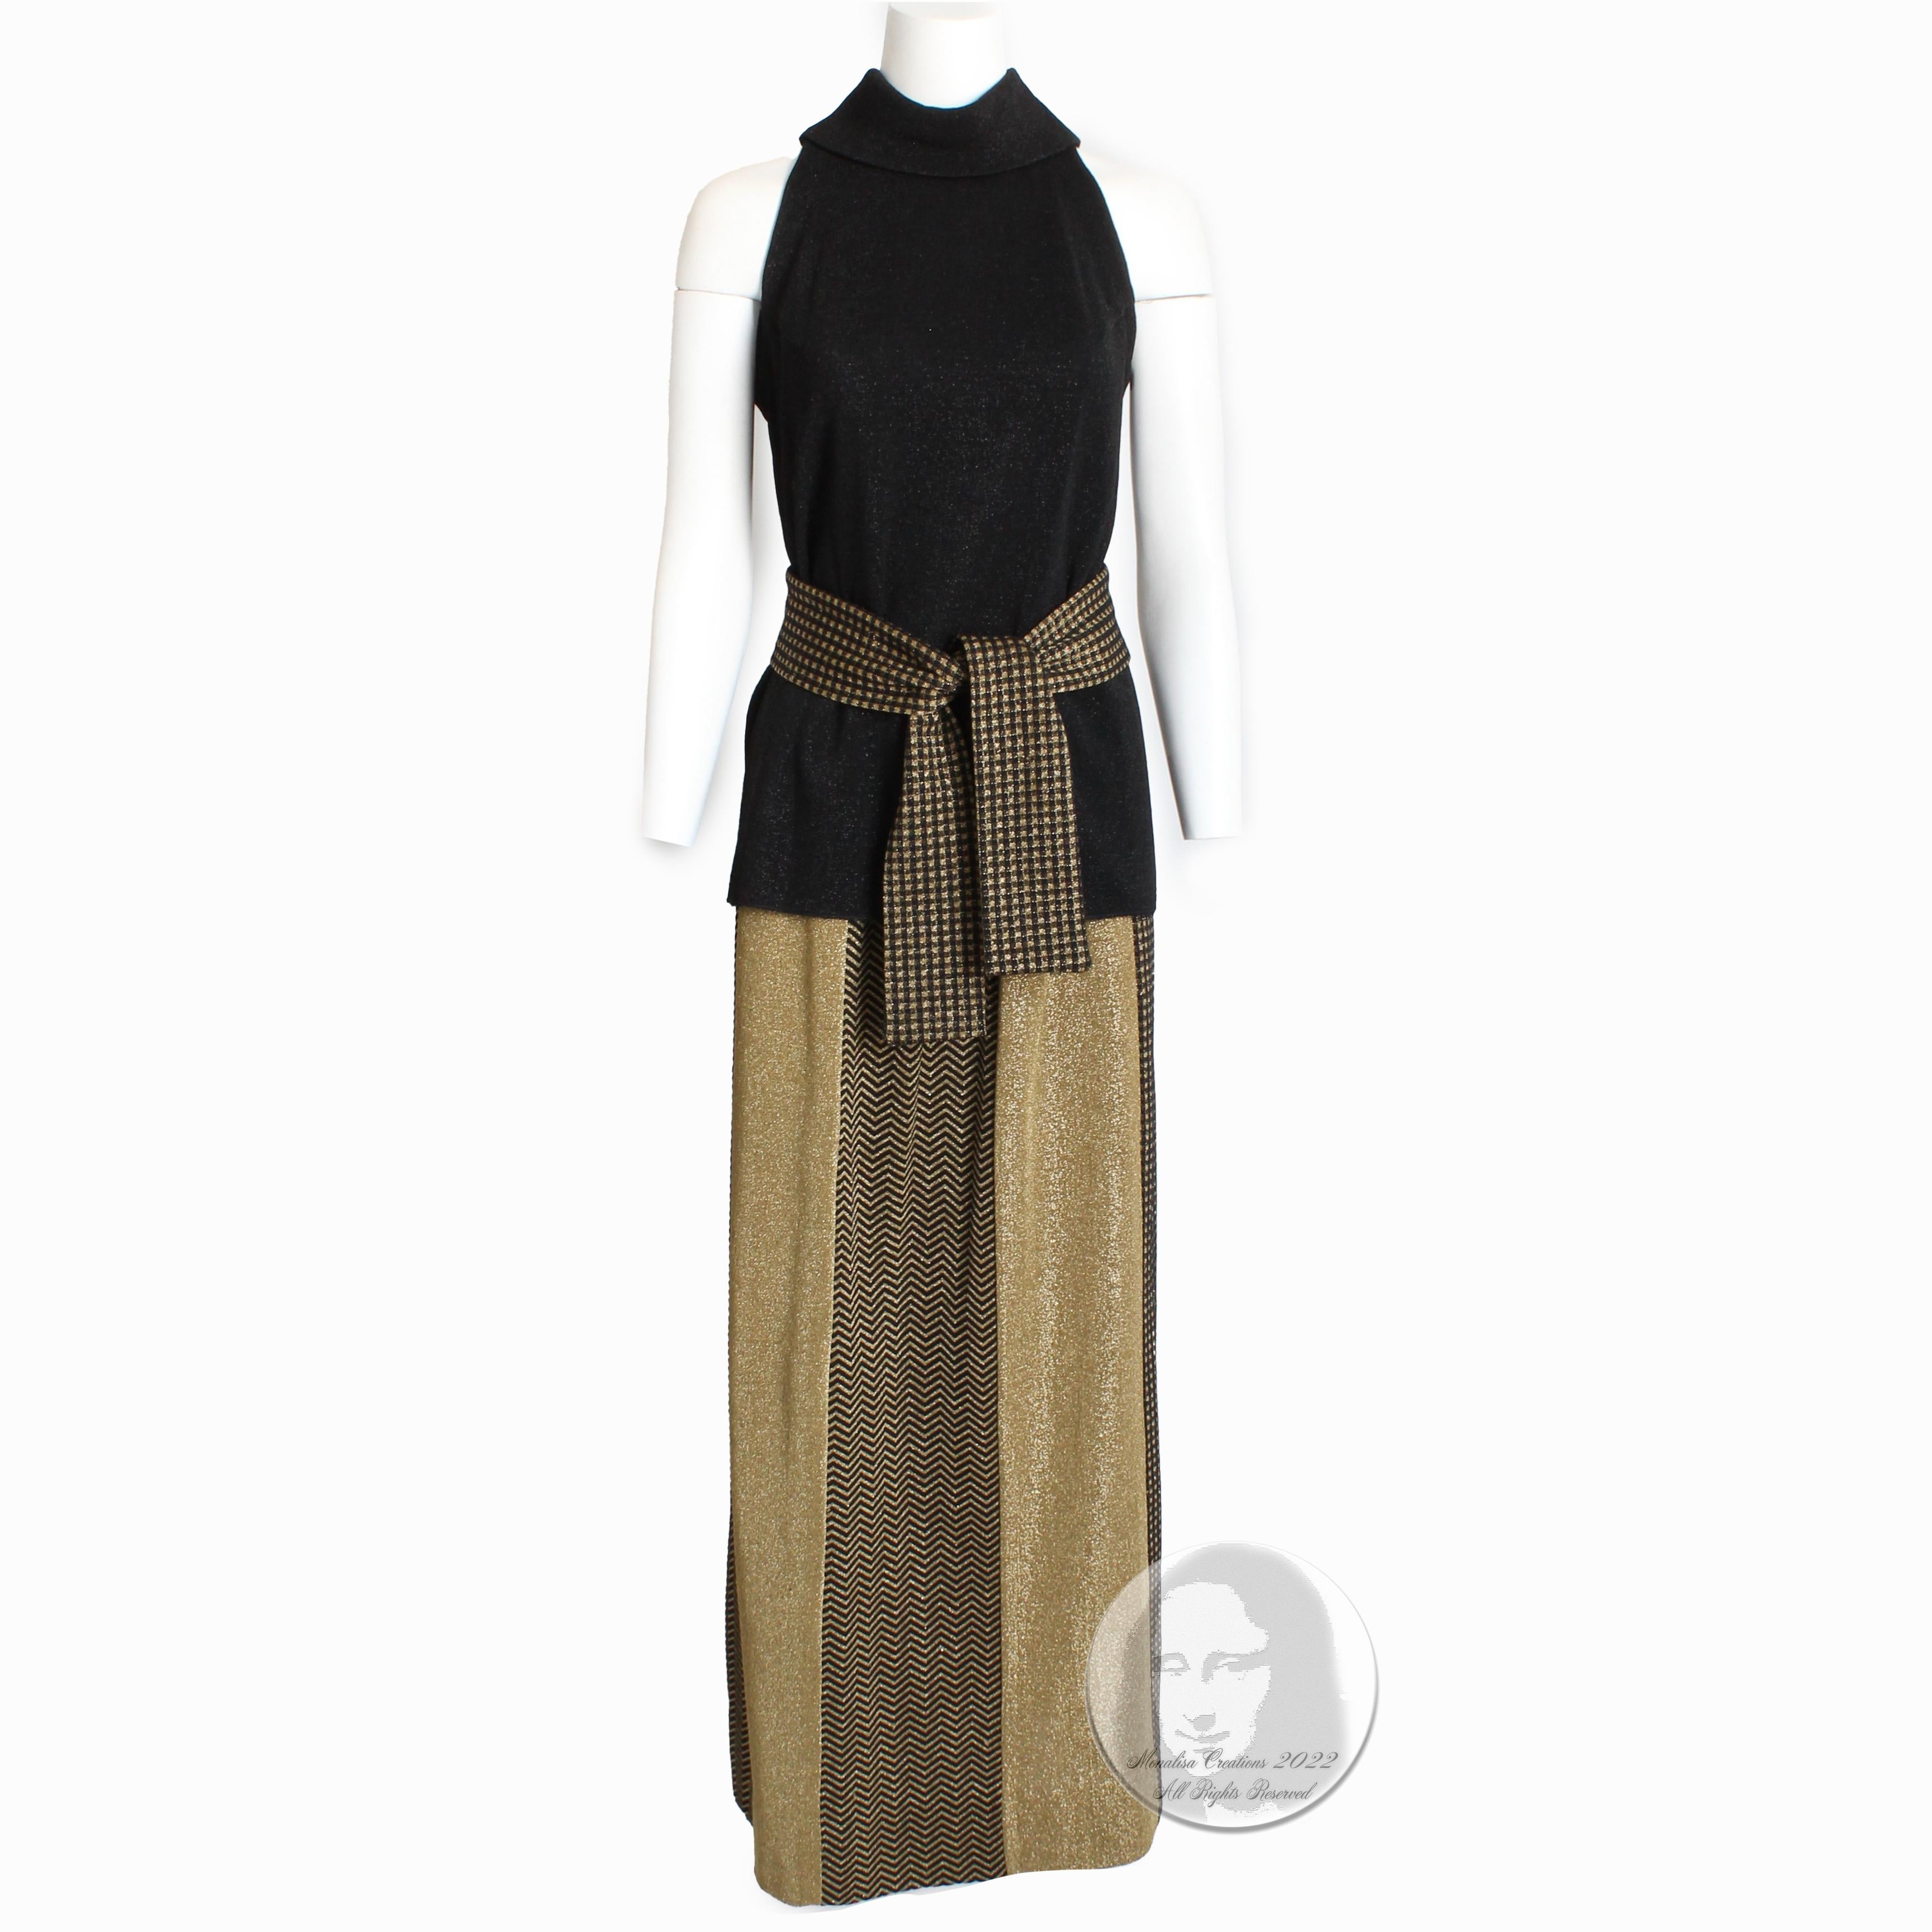 Rudi Gernreich 3pc Set Top Skirt and Sash Belt Black Gold Metallic Knit Suit 70s In Fair Condition For Sale In Port Saint Lucie, FL